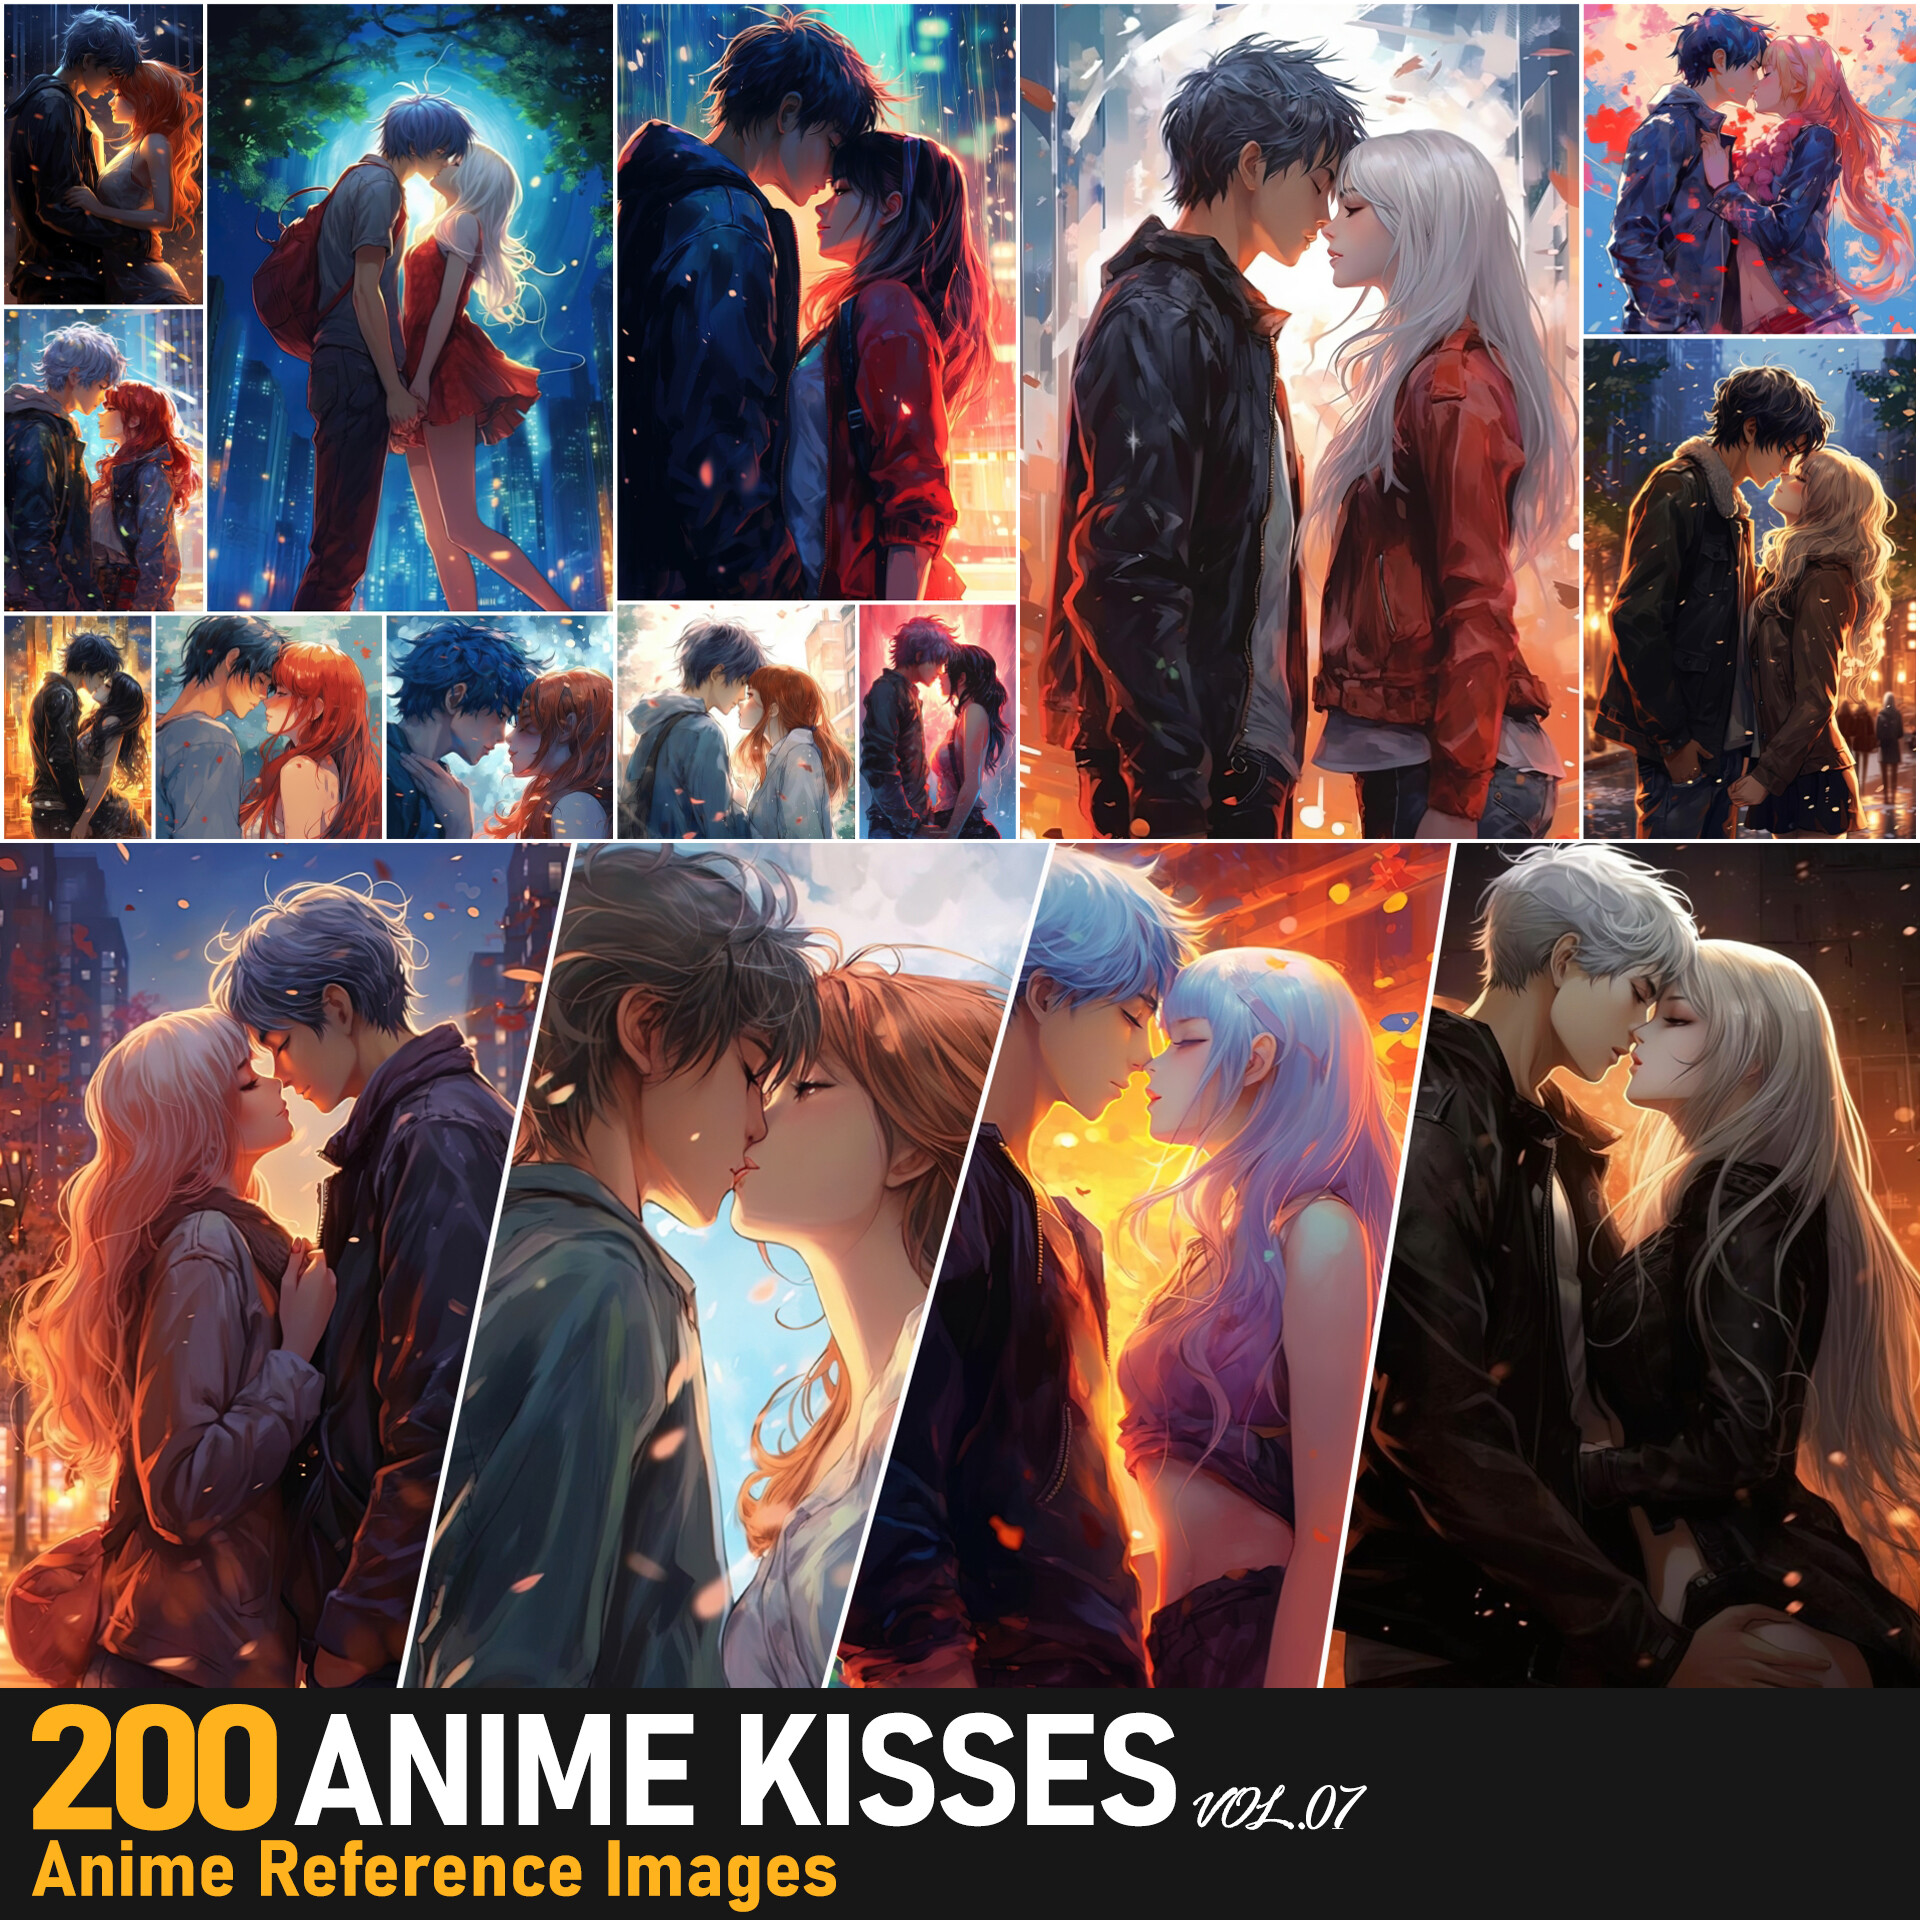 Anime Romance - Surprise kiss 😘 Anime/Manga = My Hero... | Facebook